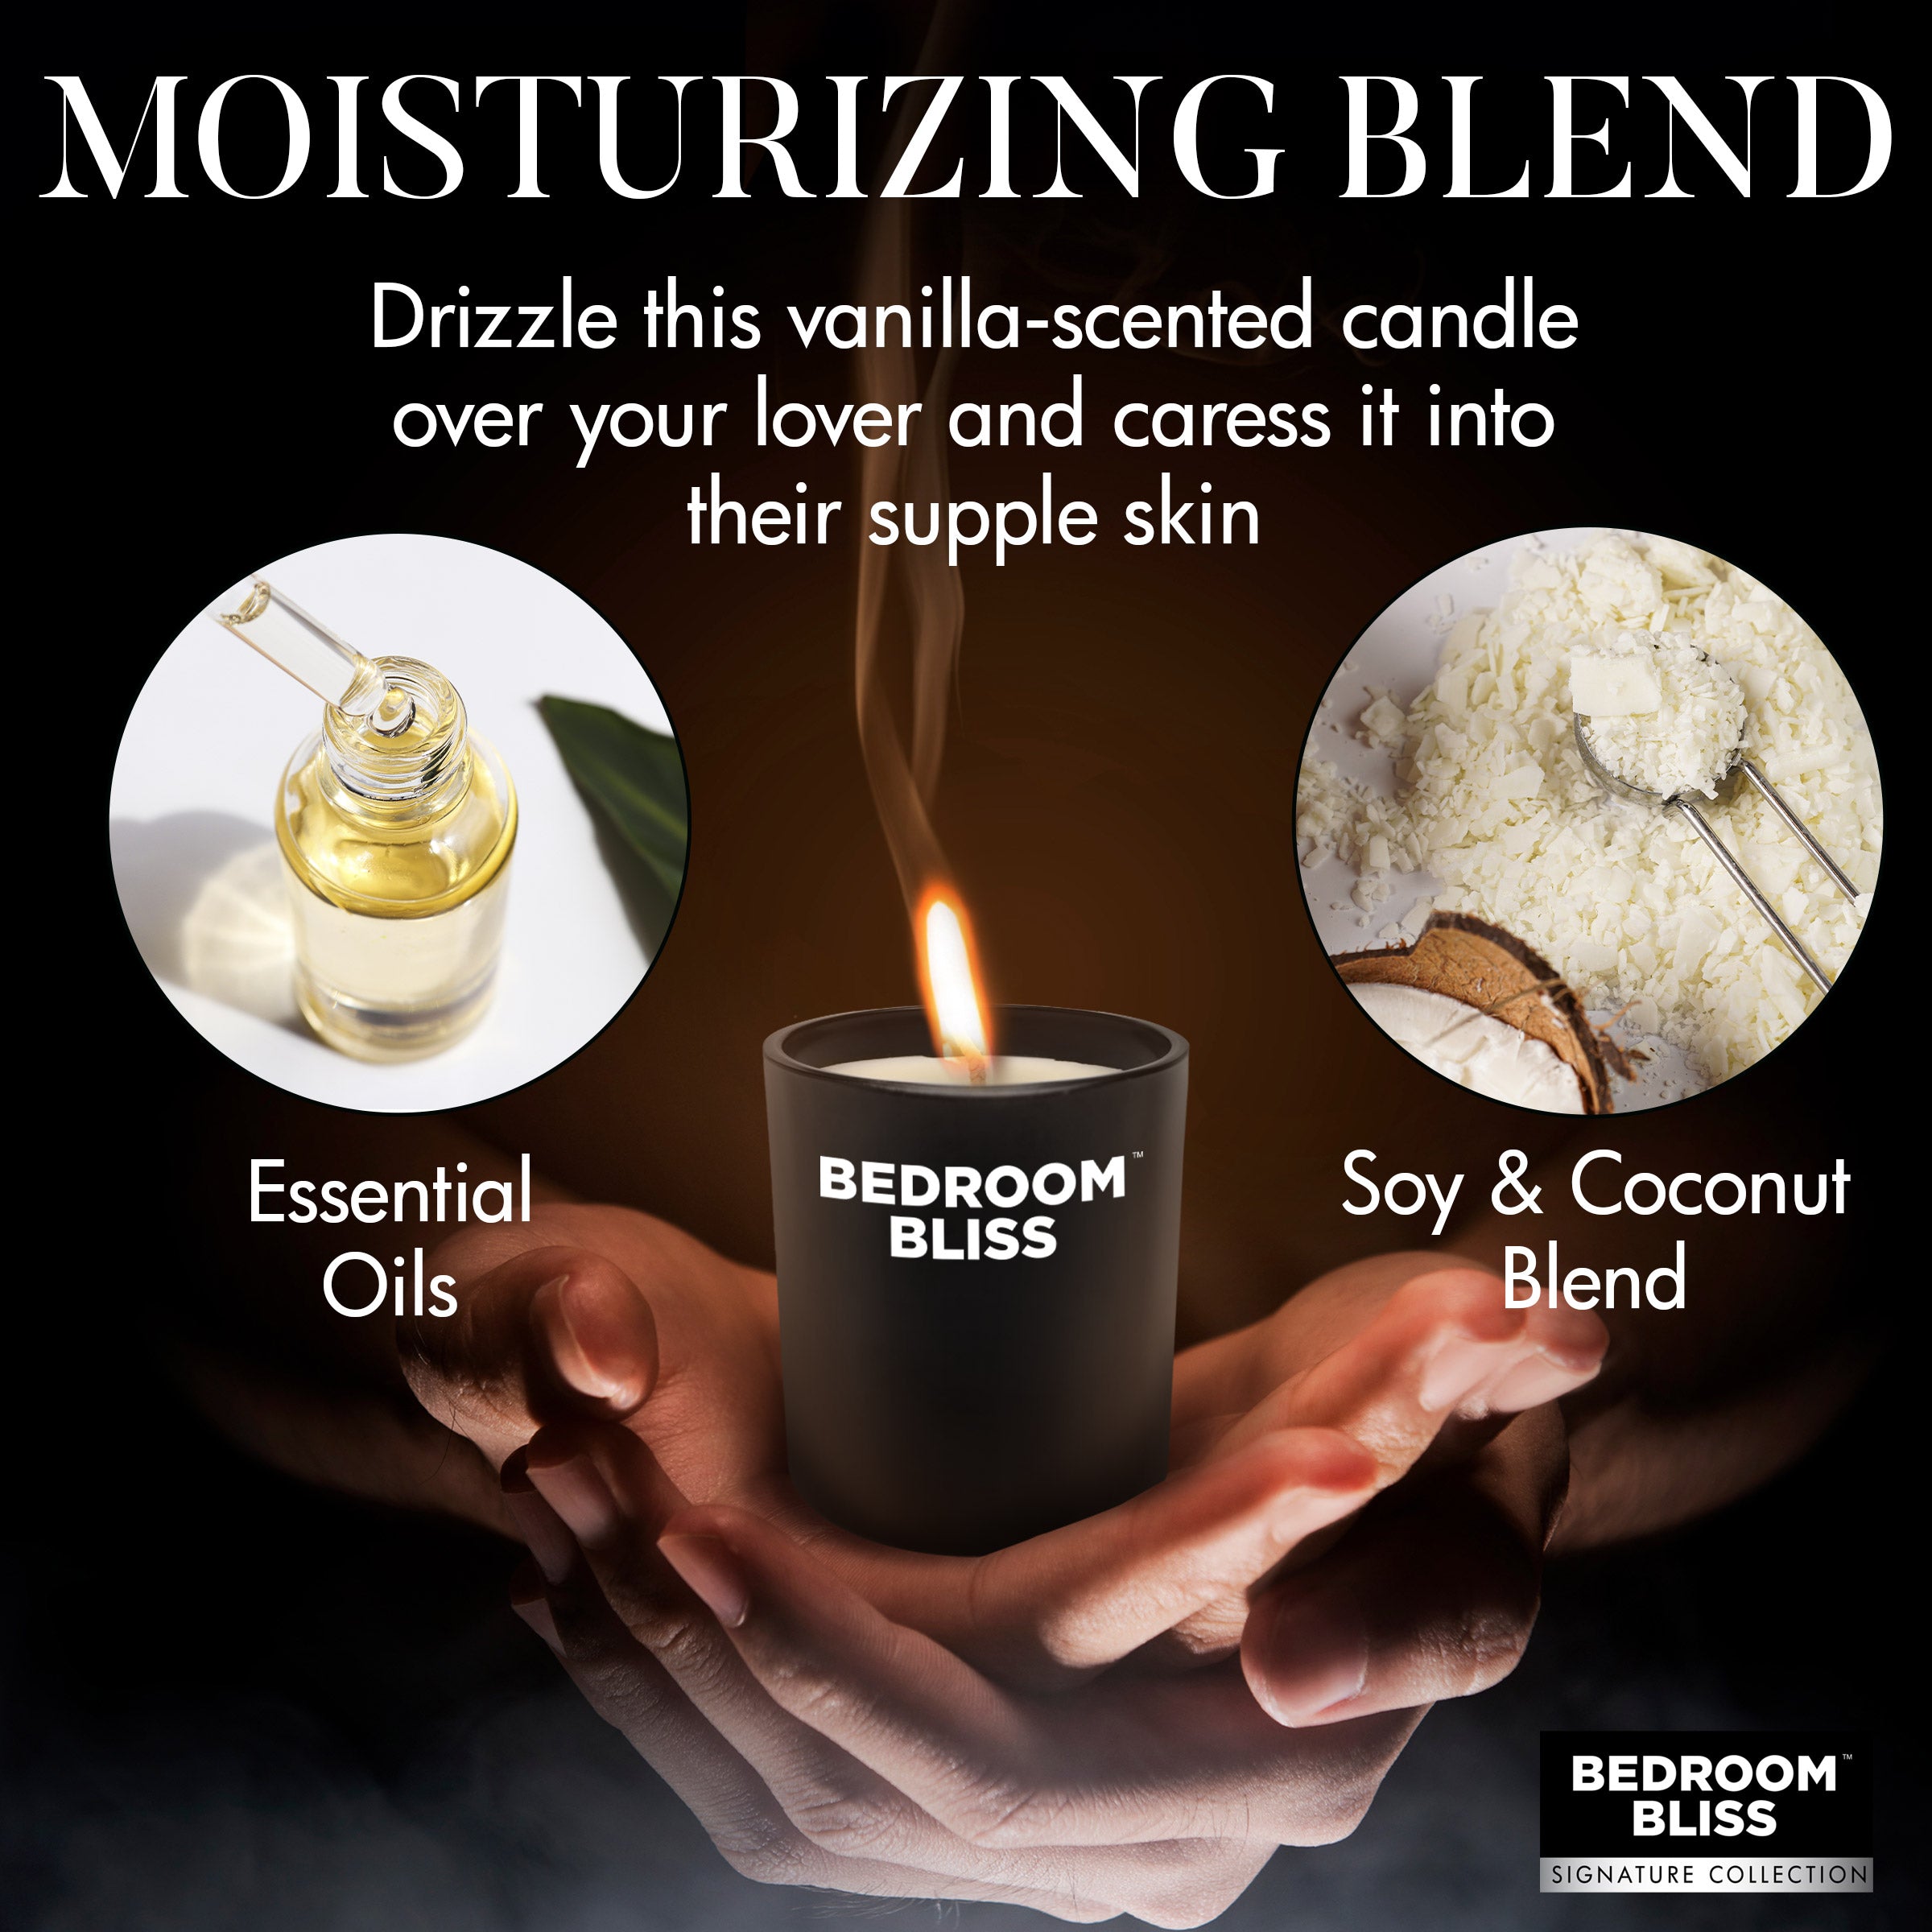 Lover's Massage Candle - Vanilla